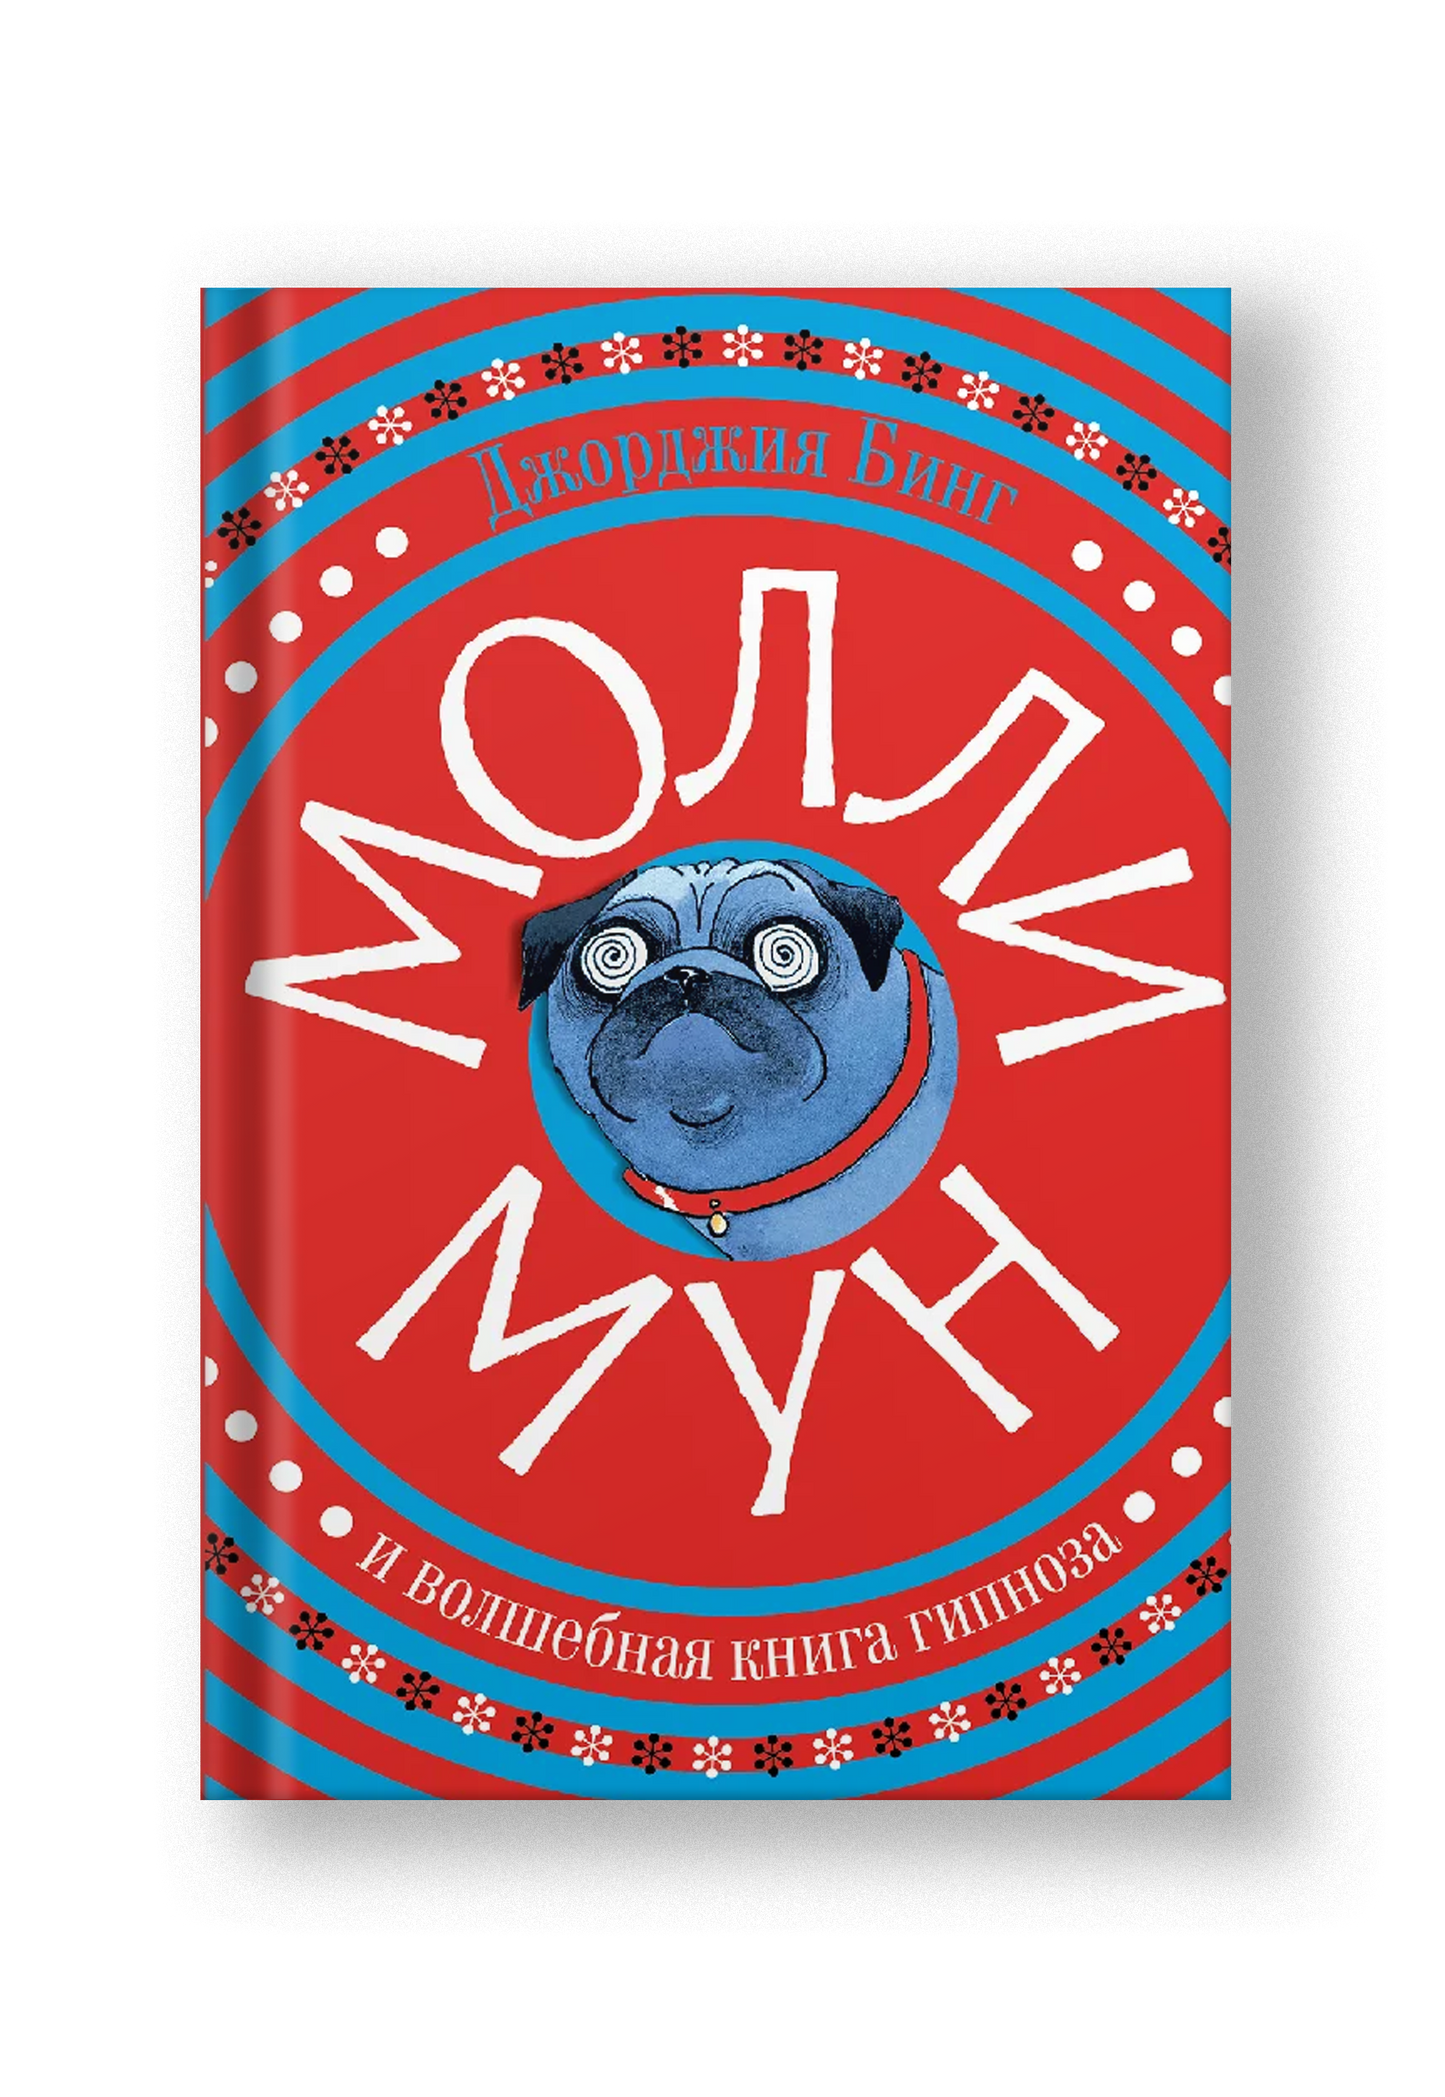 Молли Мун и волшебная книга гипноза (переиздание)